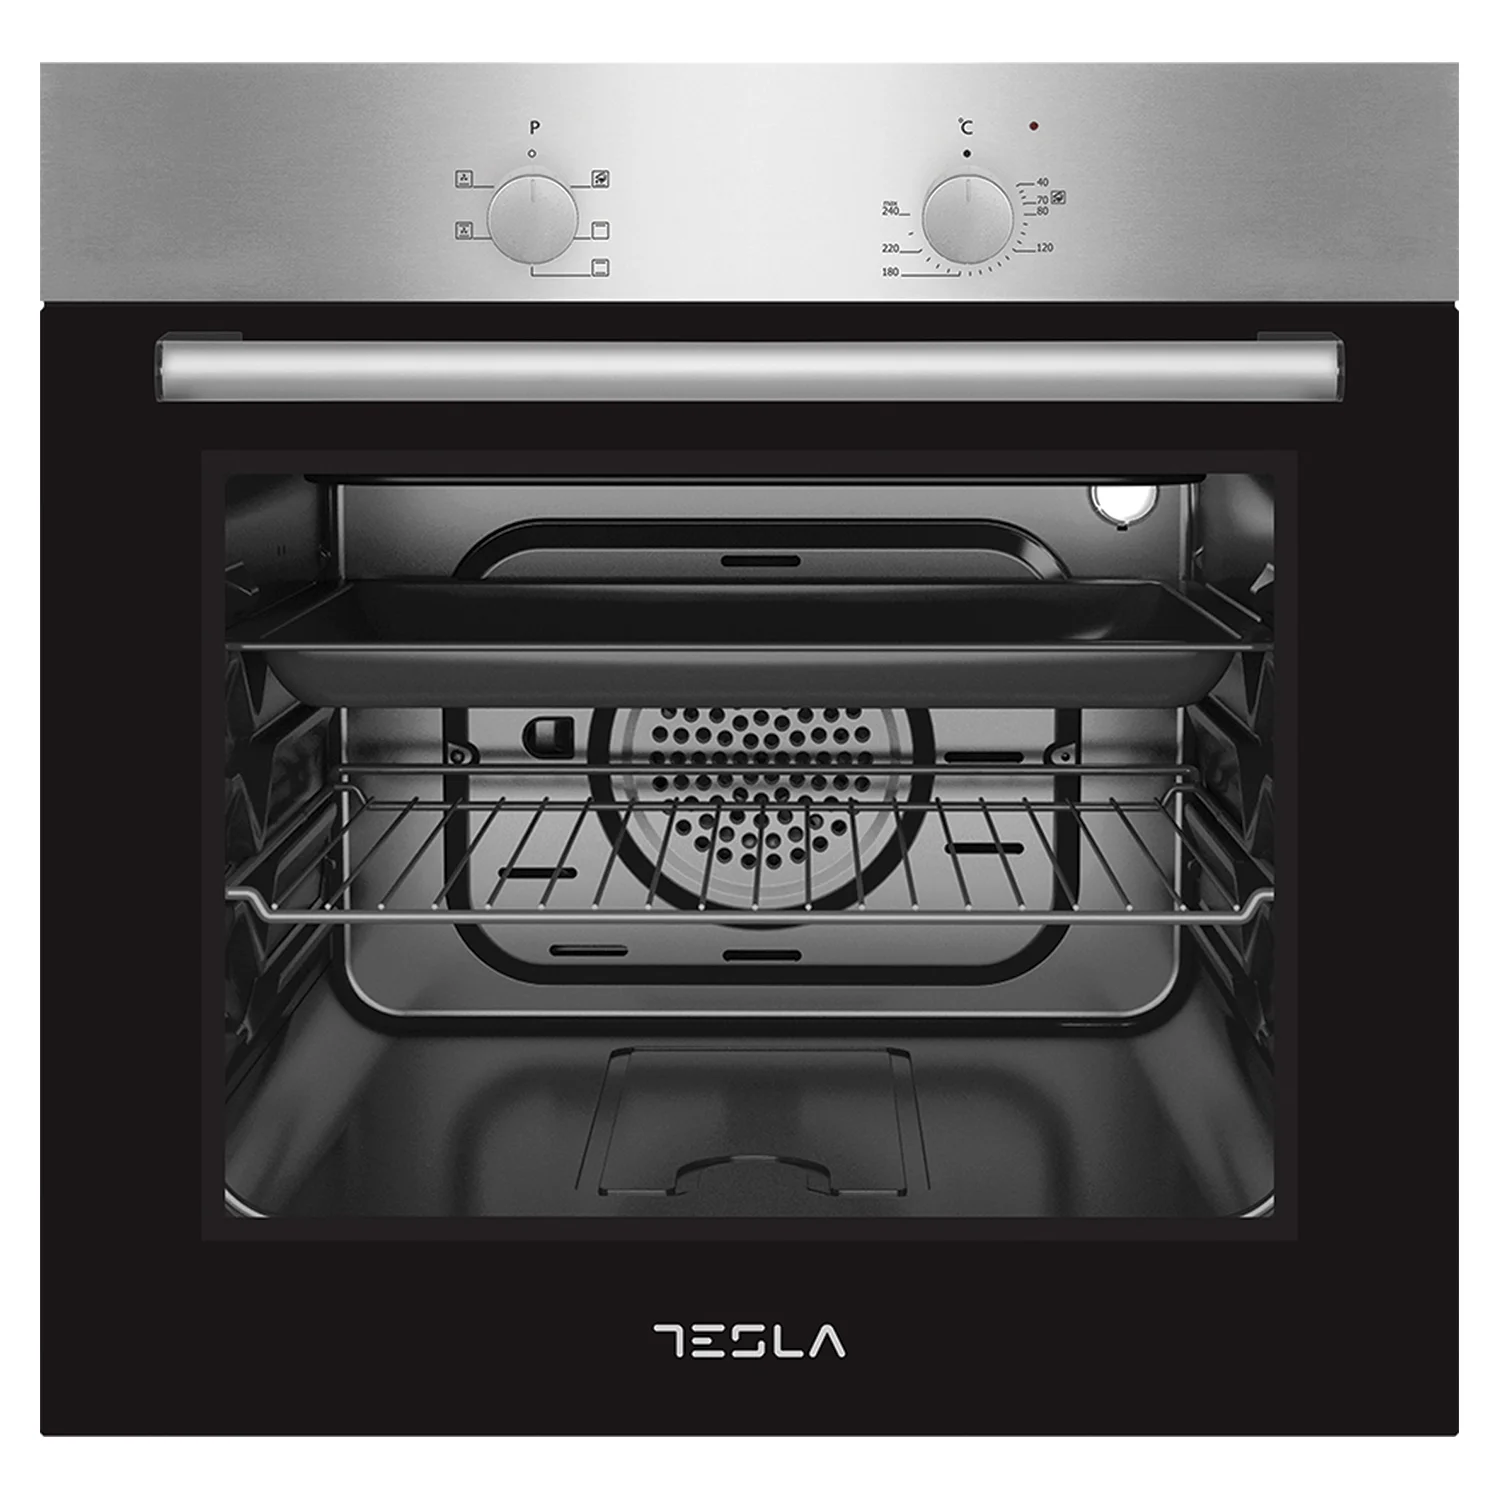 Prednja strana i unutrašnjost ugradbene rerne Tesla, siva